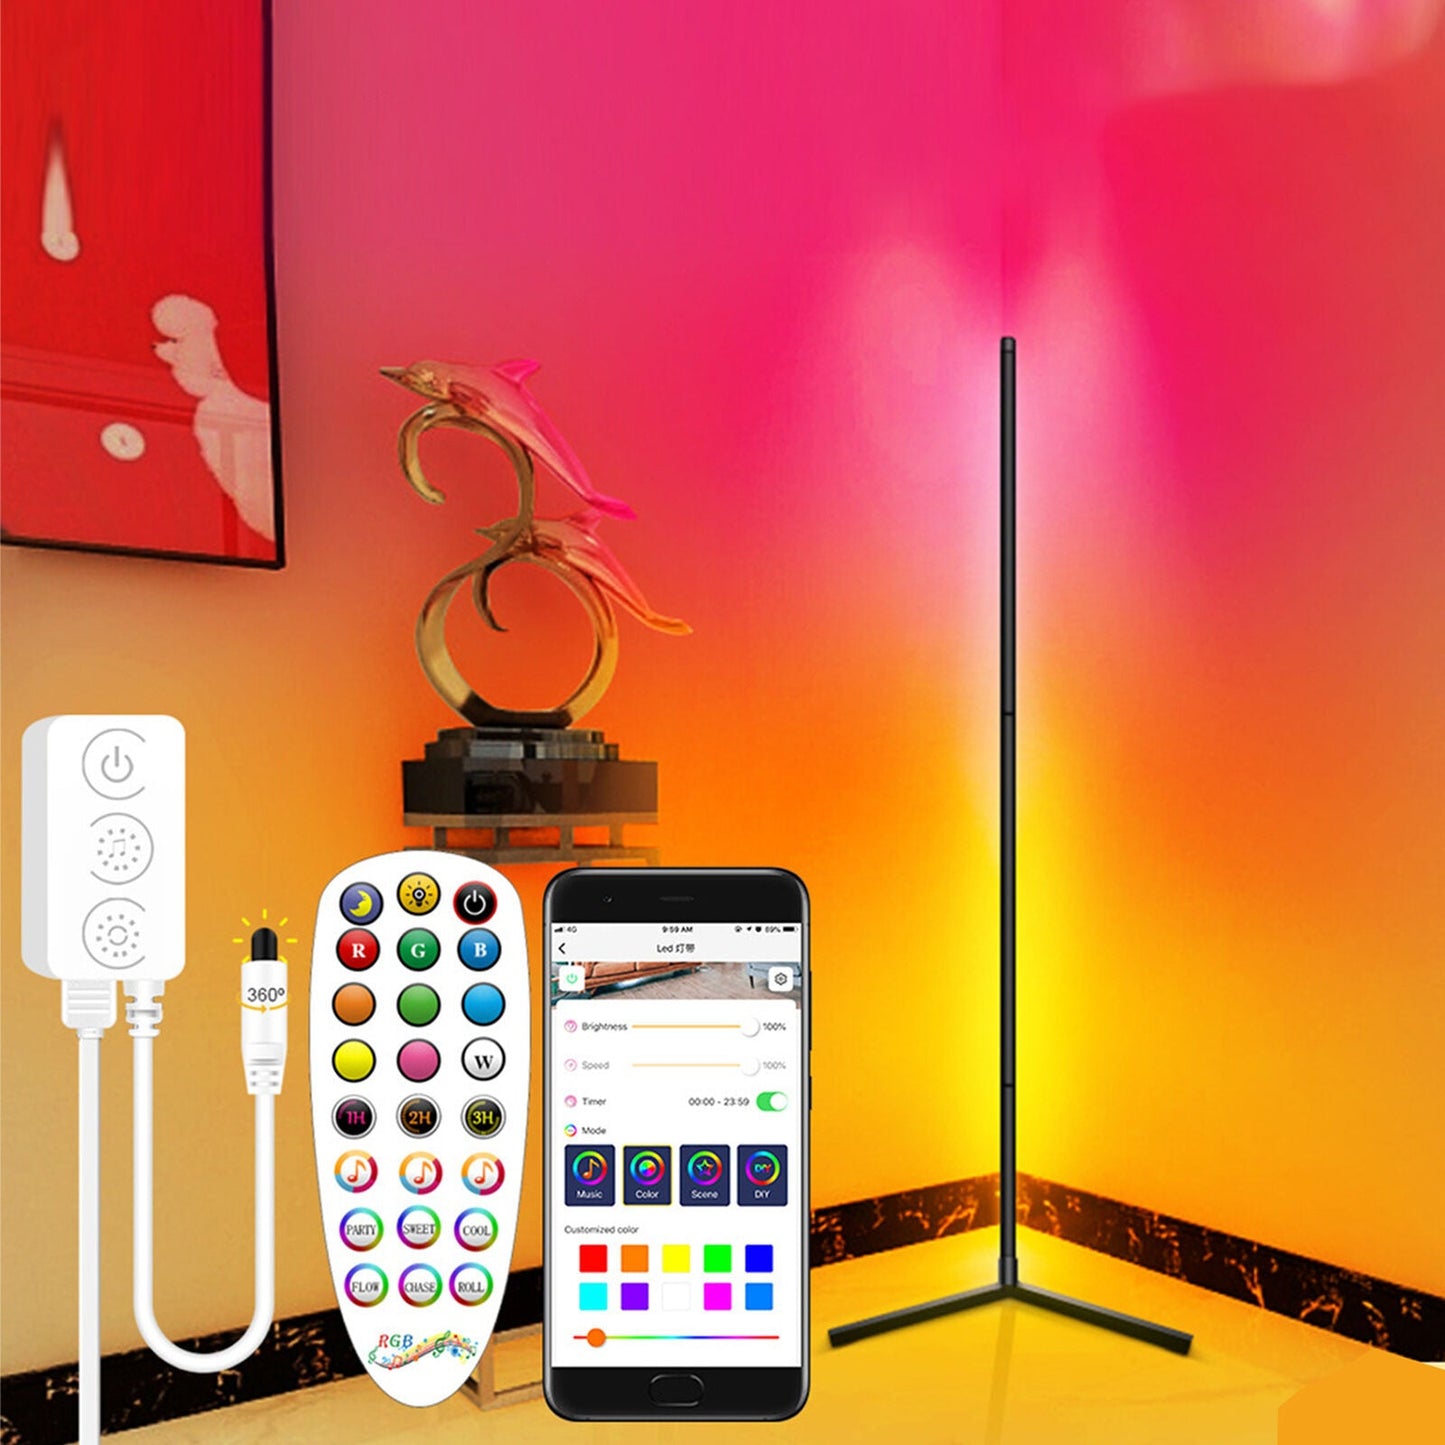 156CM RGB Floor Corner Lamp Light Stand bluetooth+Remote Control LED Streaming